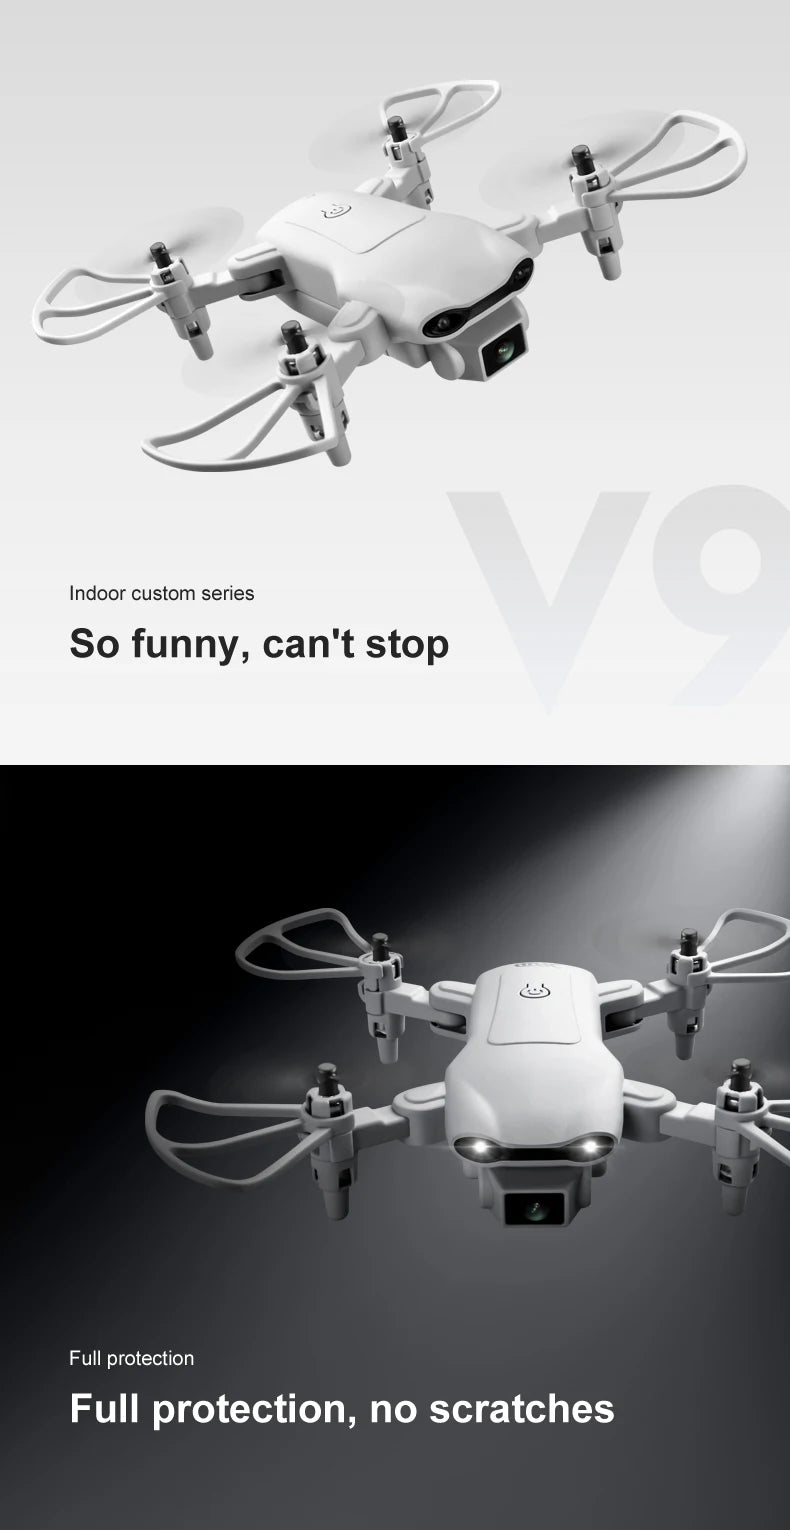 V9 RC Mini Drone, indoor custom series v76 so funny, can't stop full